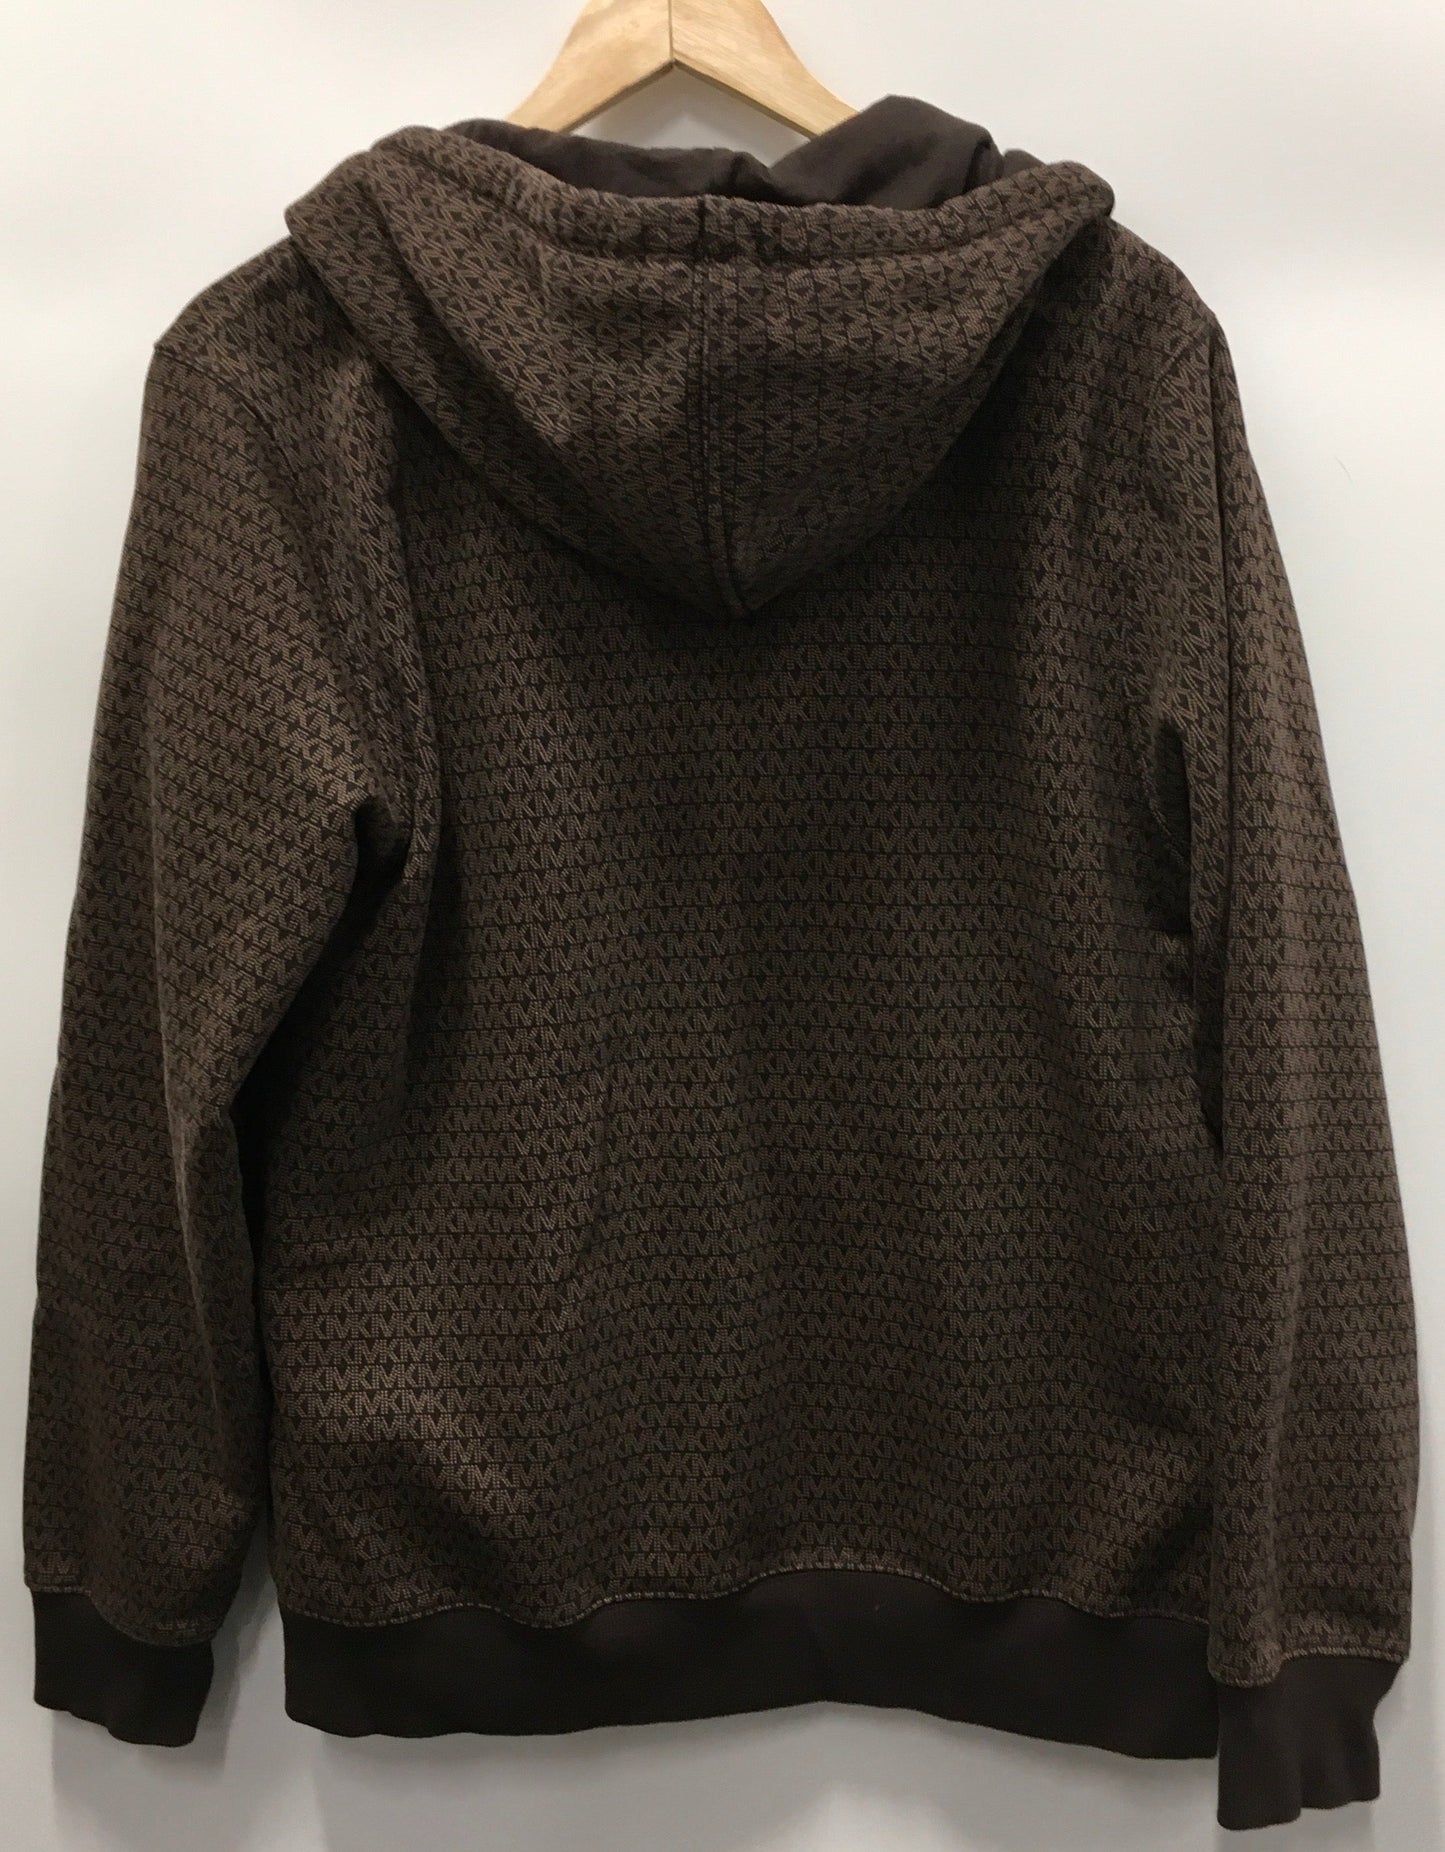 Sweatshirt Designer By Michael Kors  Size: S